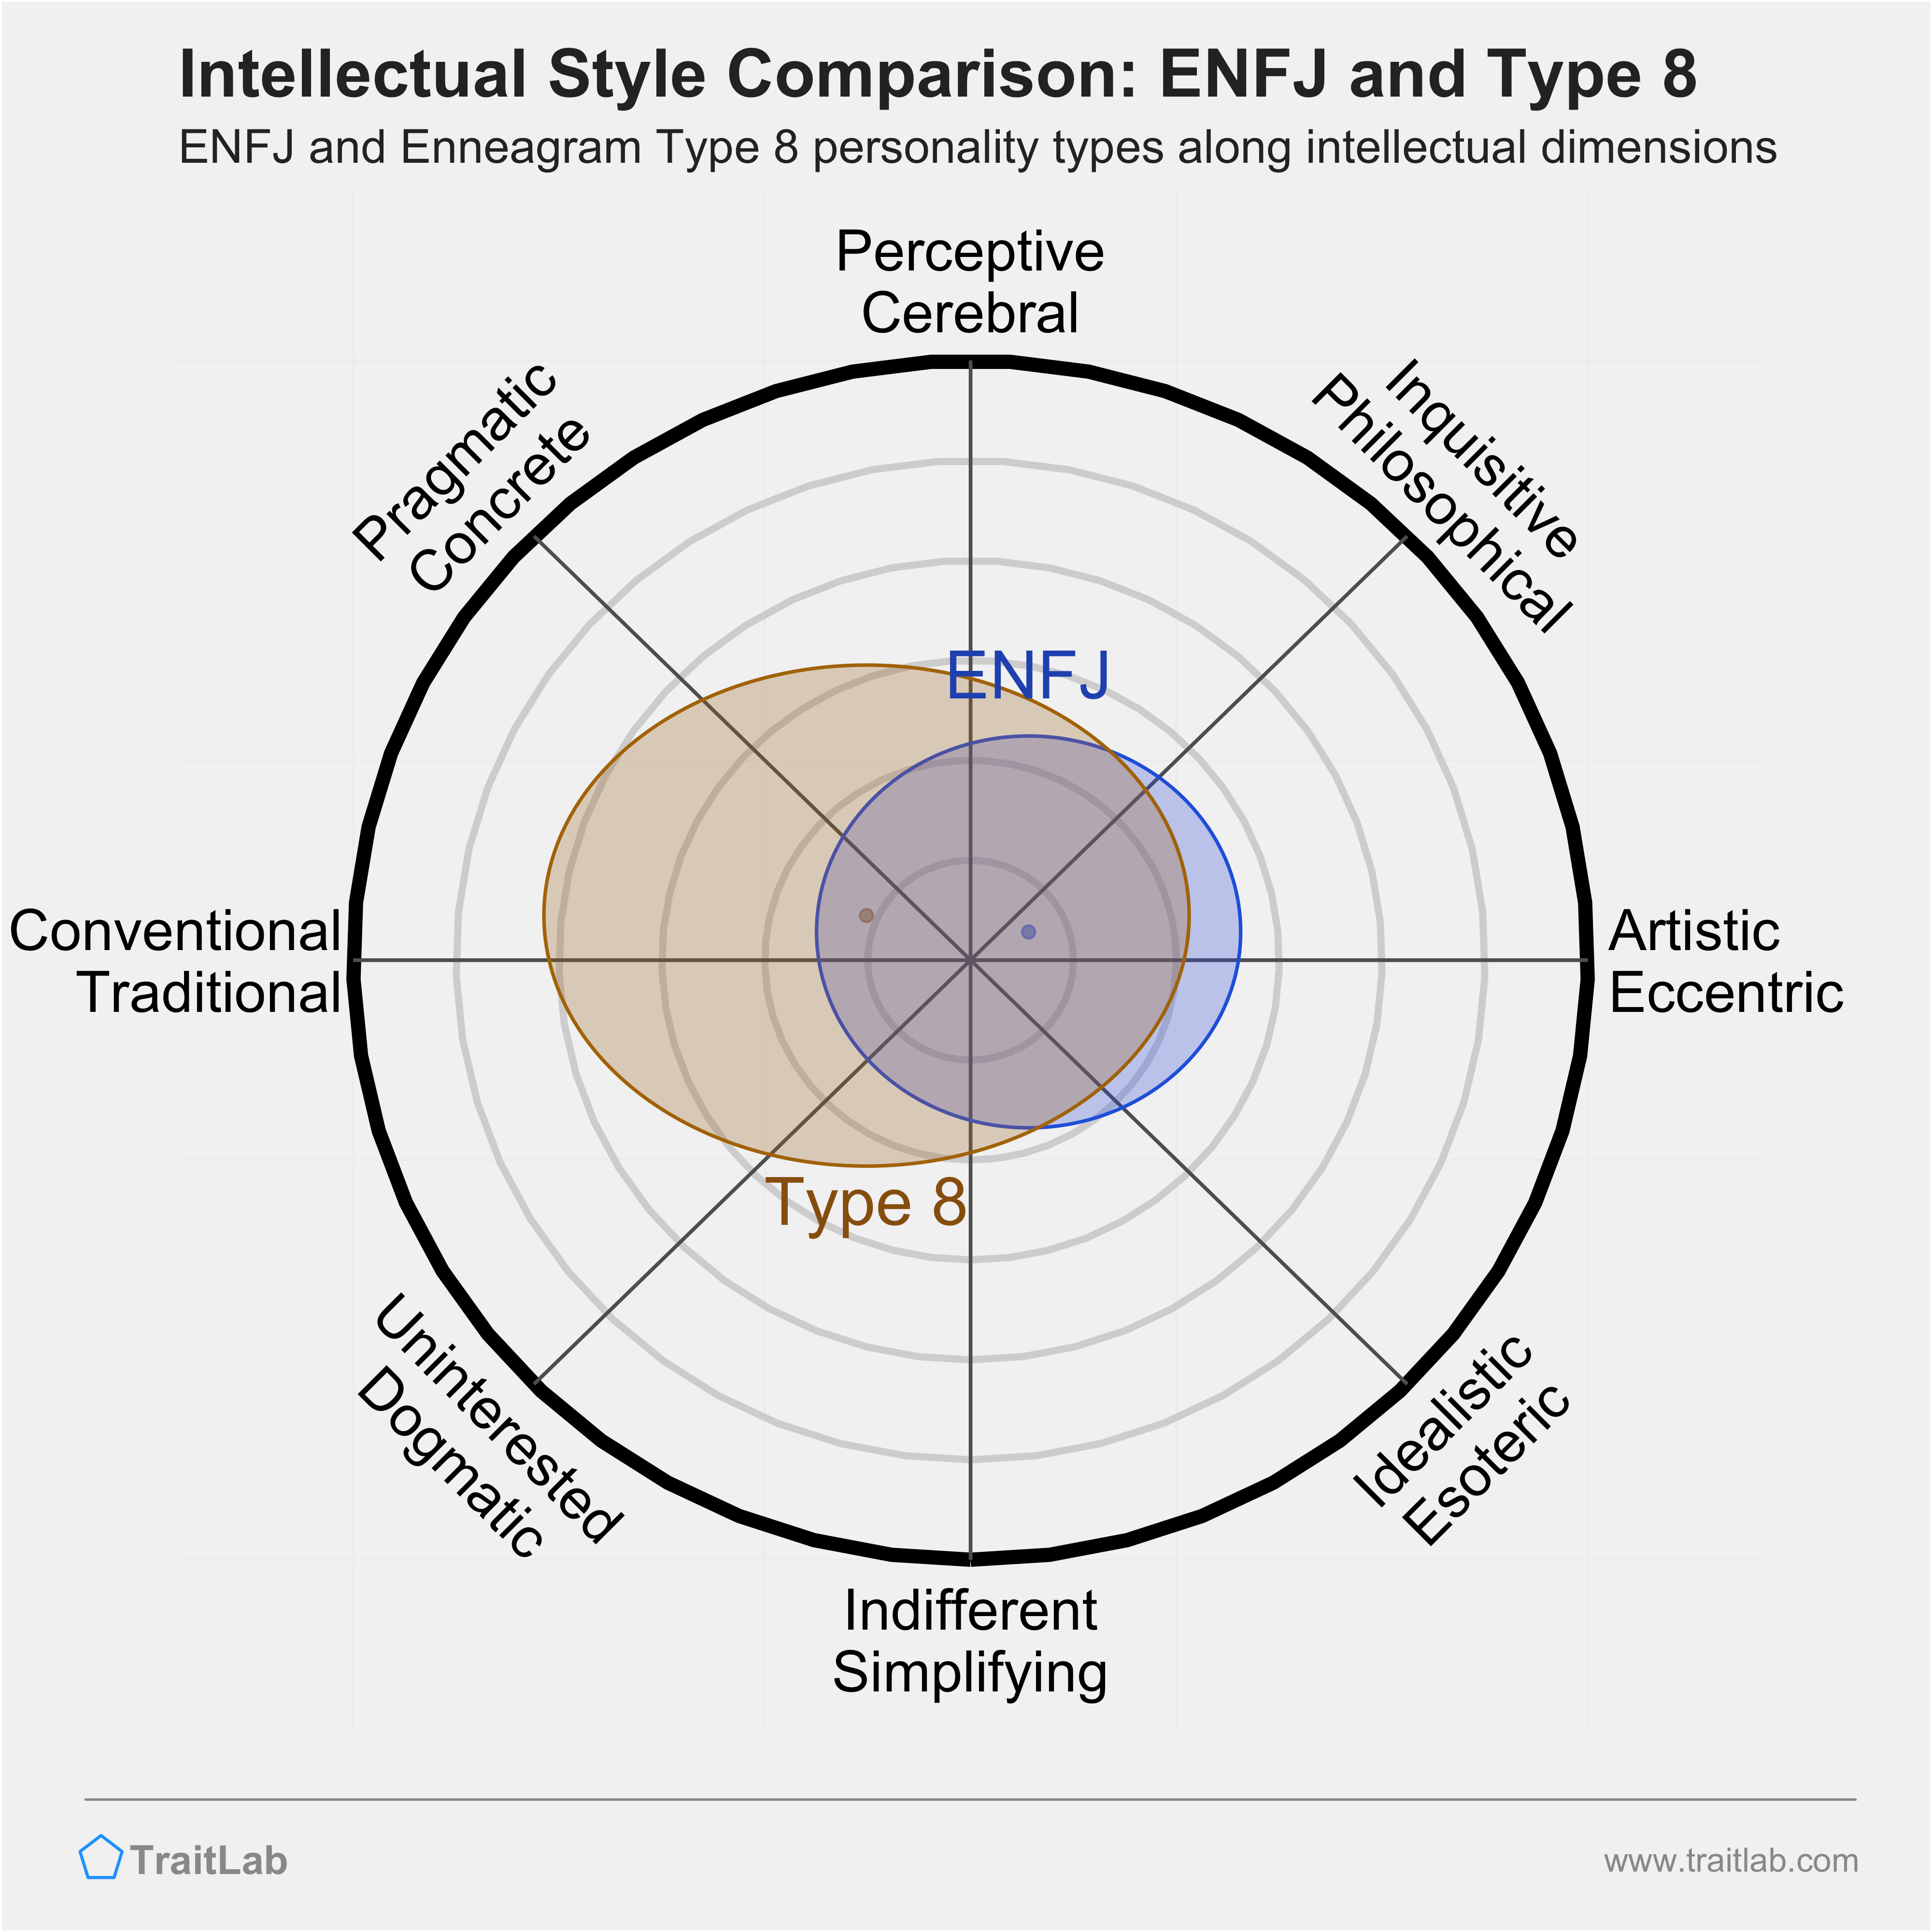 ENFJ and Type 8 comparison across intellectual dimensions